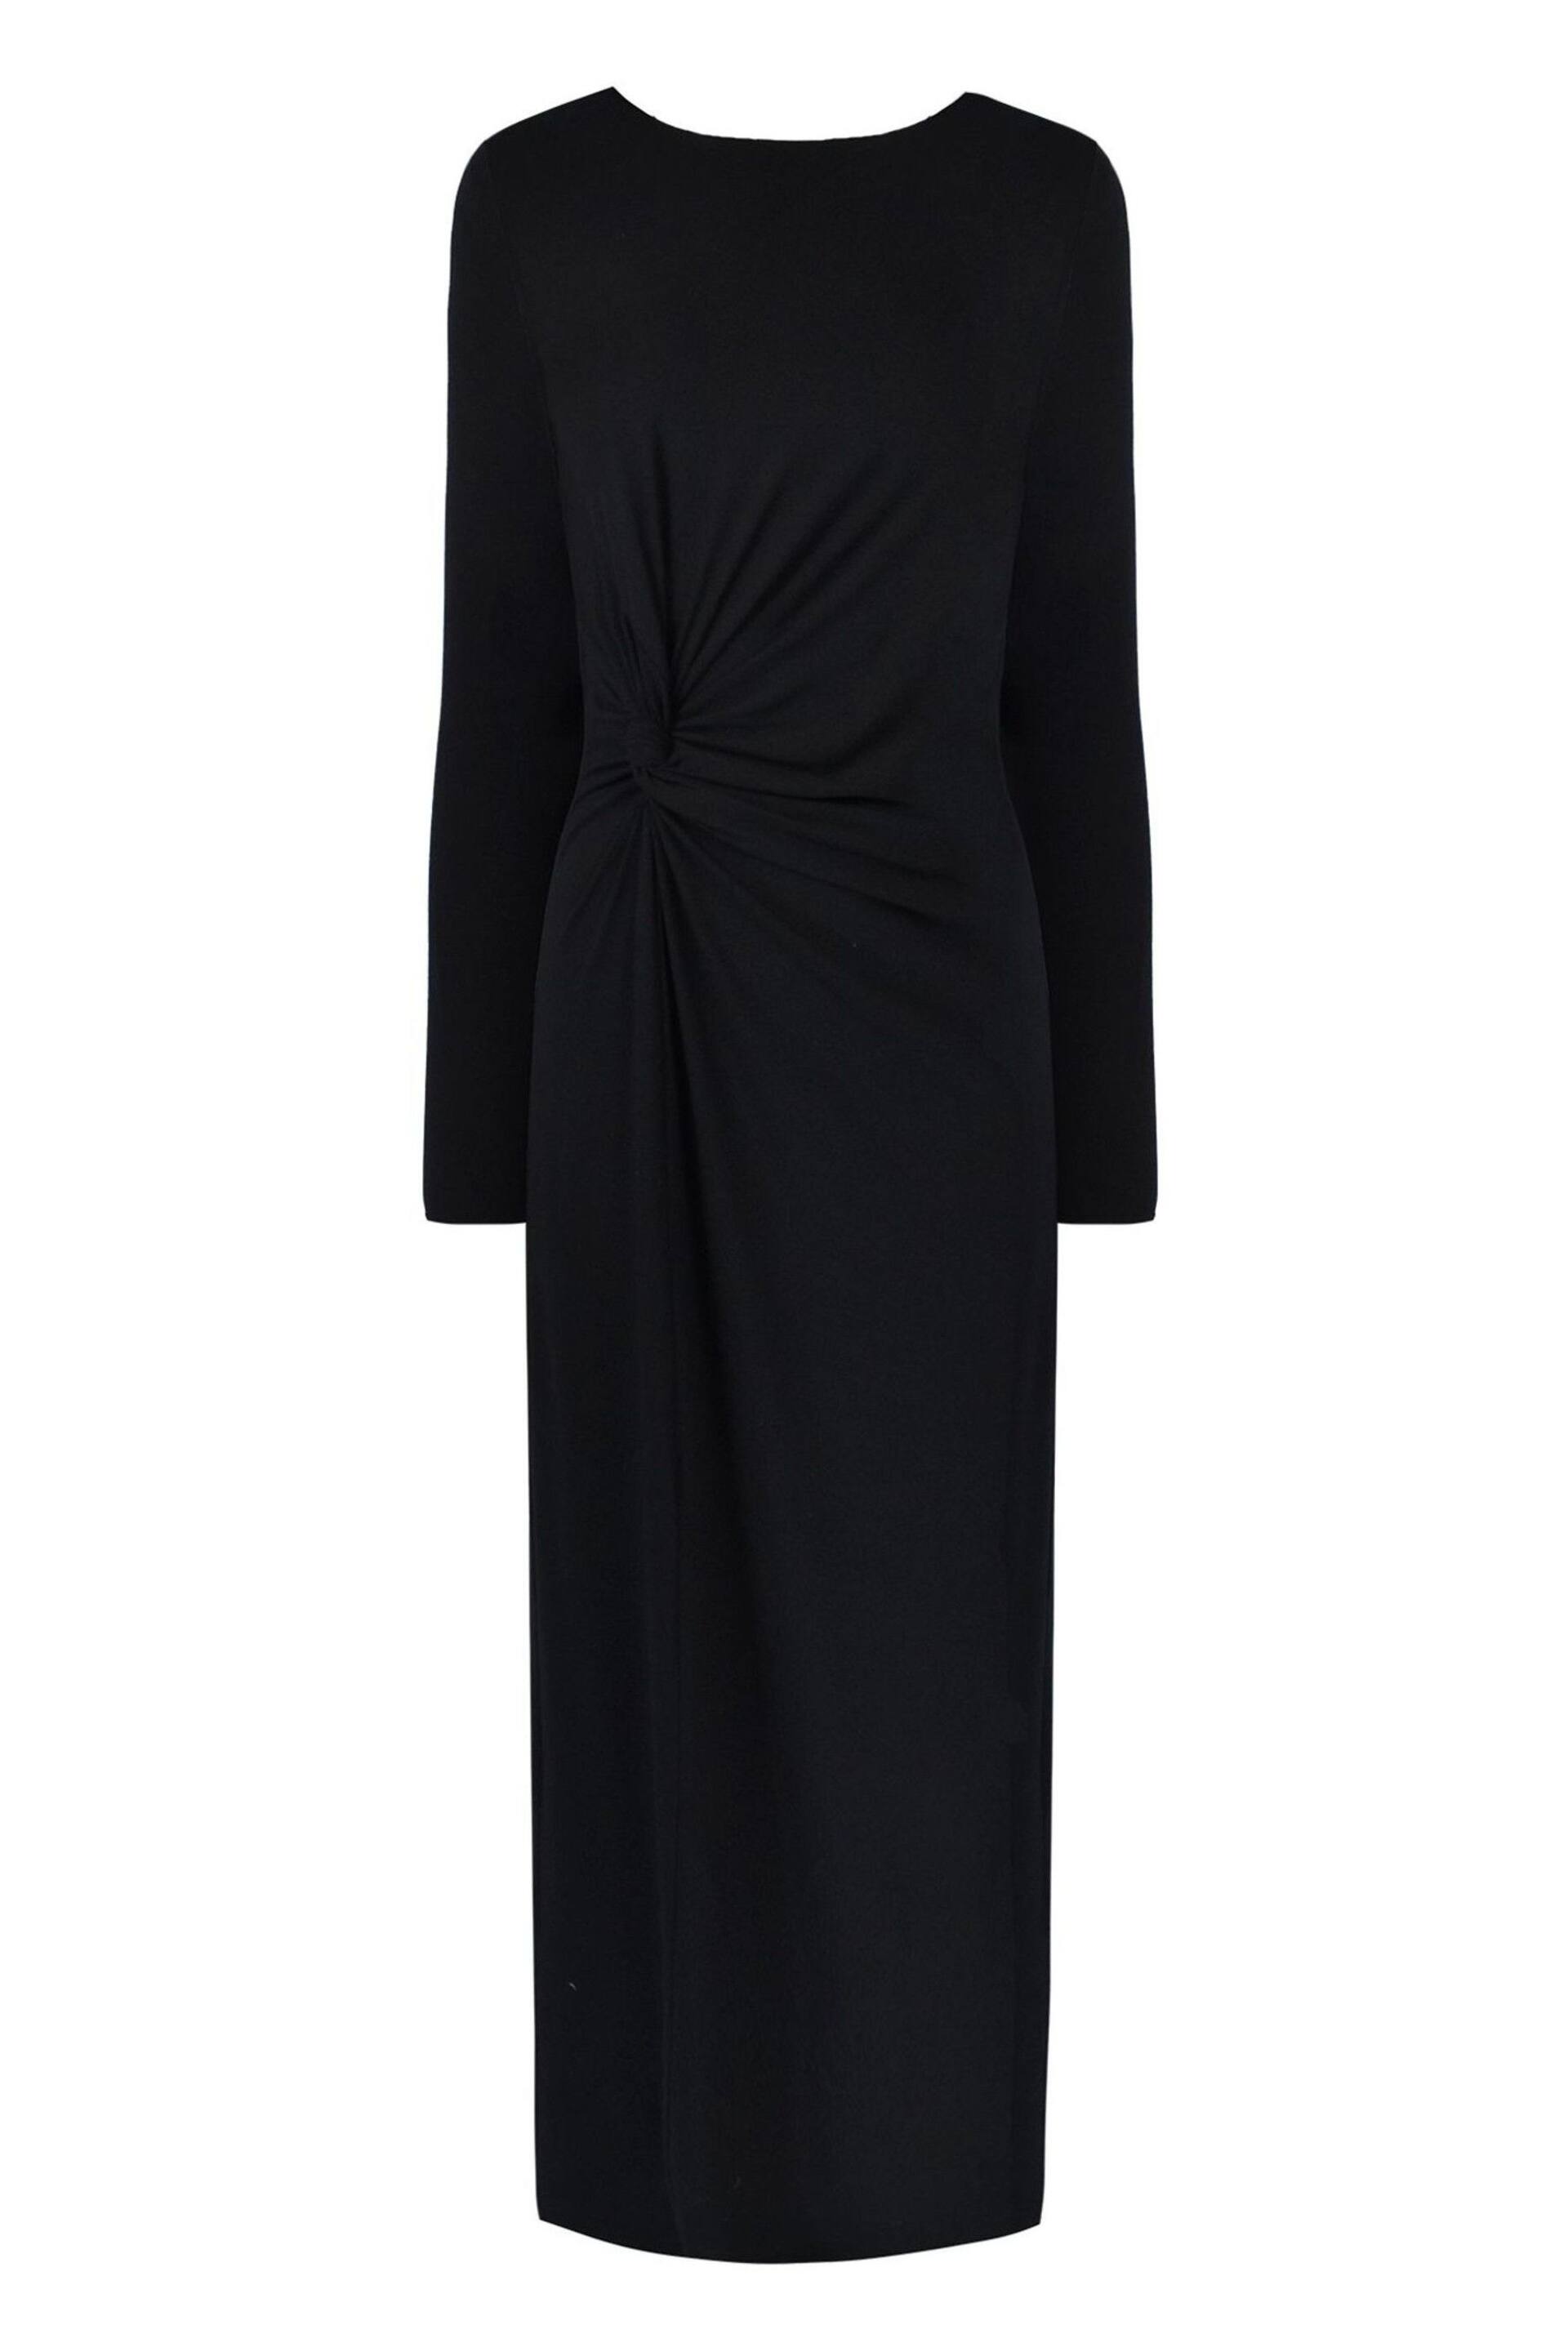 RO&Zo Petite Twist Detail Jersey Dress - Image 5 of 5